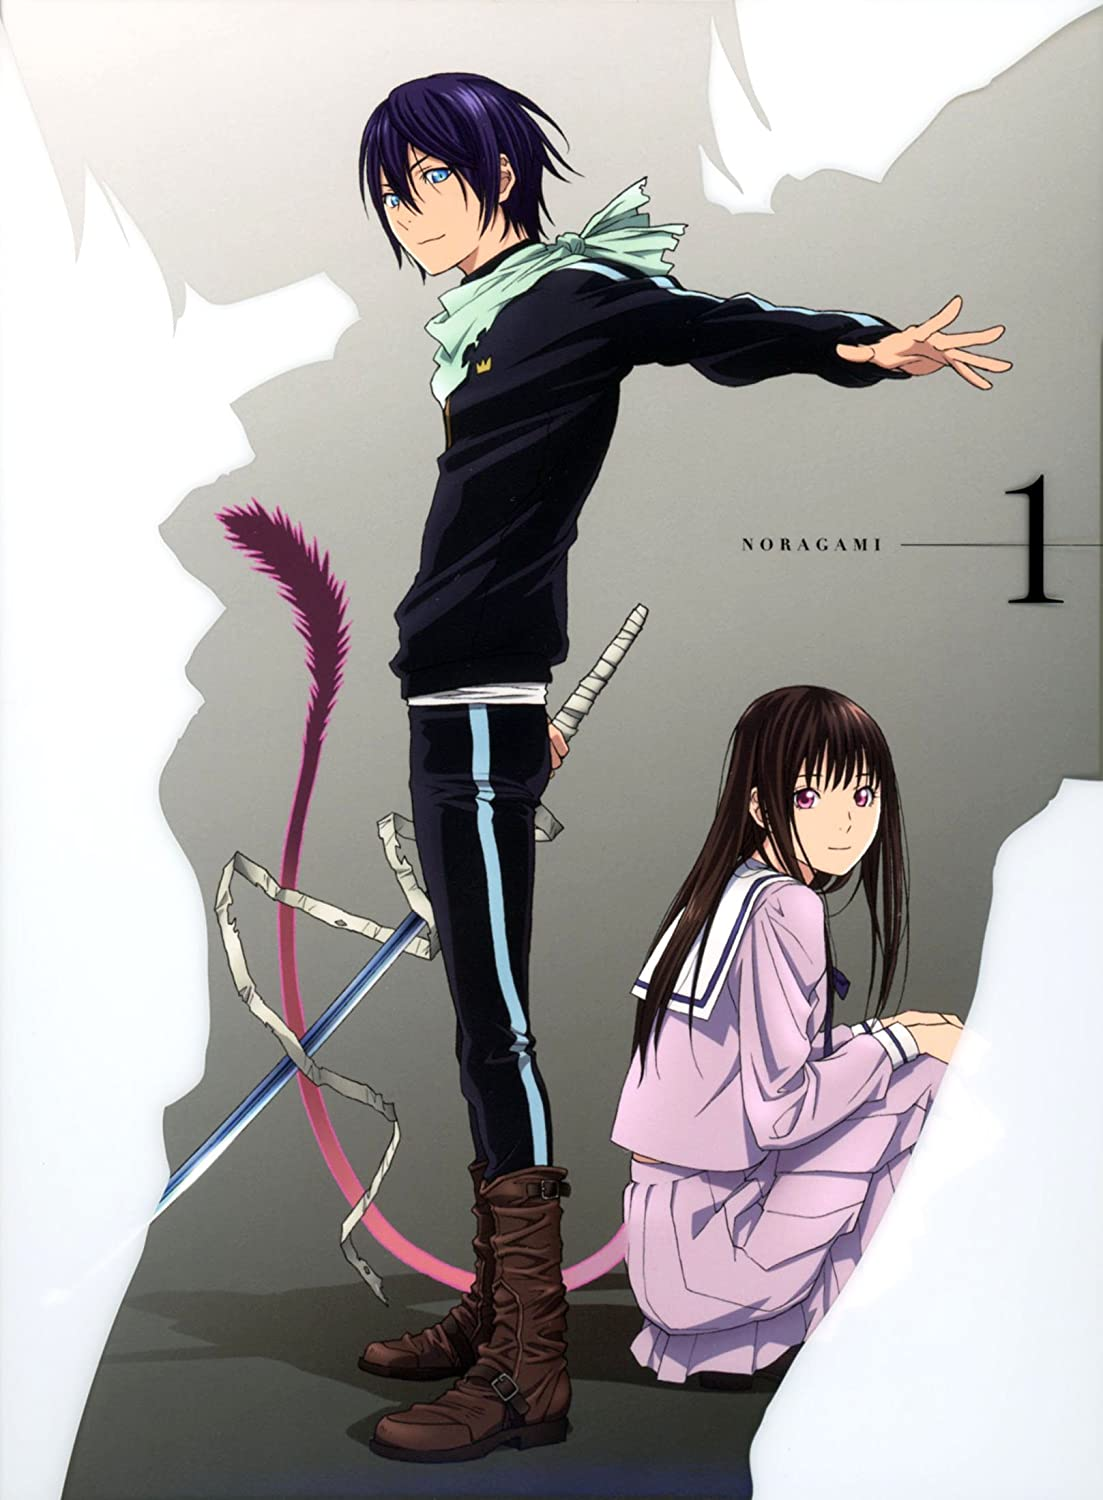 DVD Anime NORAGAMI Complete Series ( Season 1+2 +OVA ) English Dubbed Audio